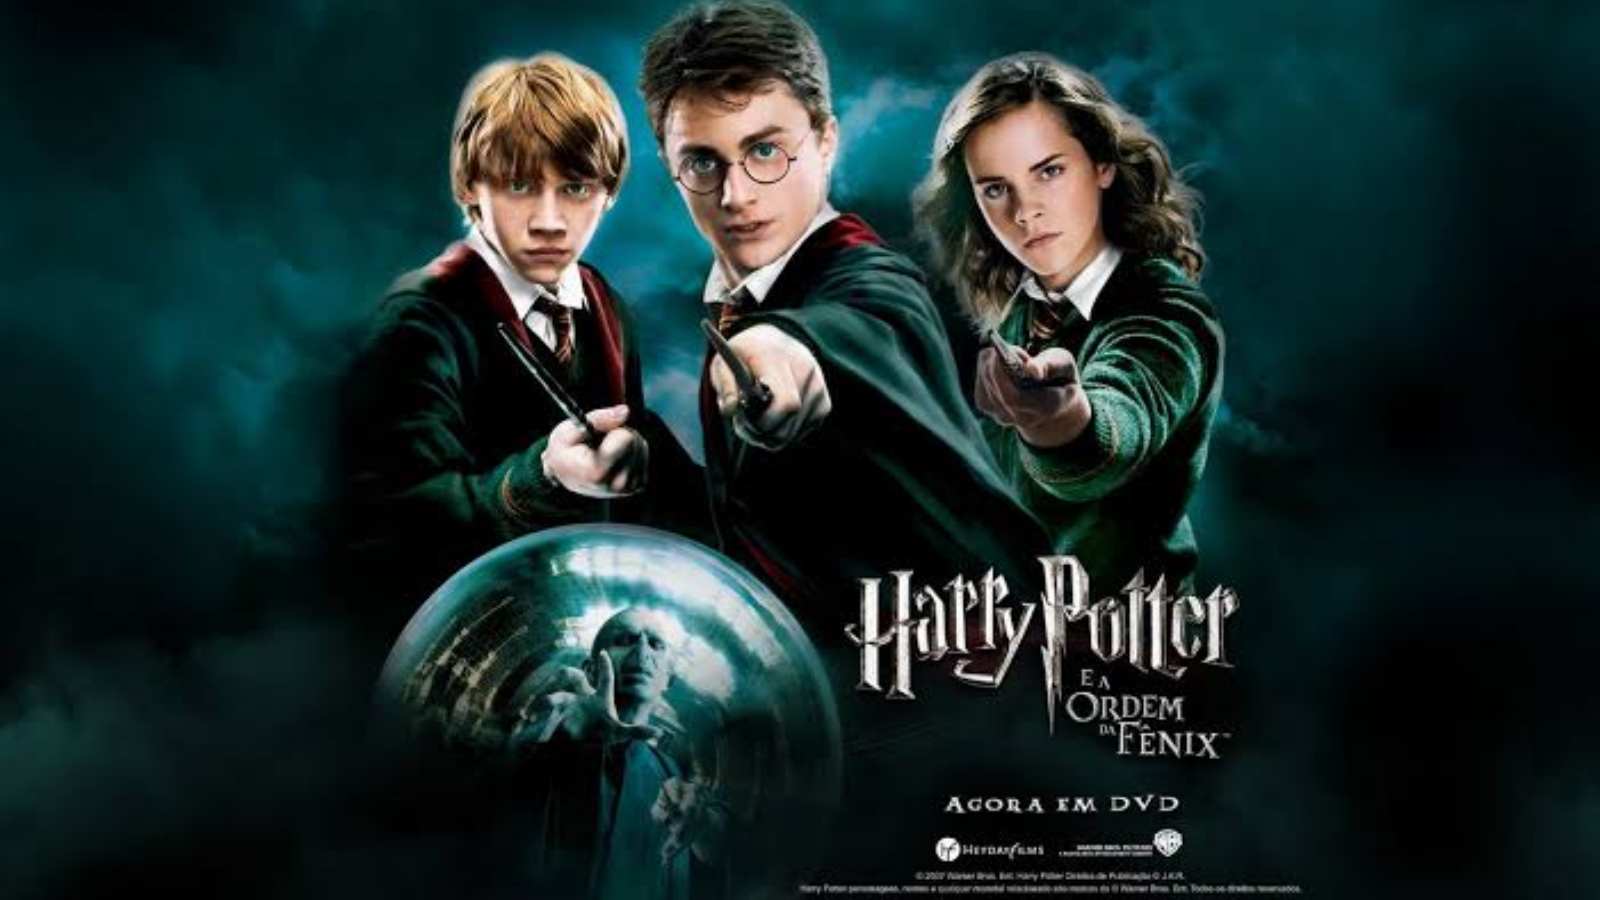 Harry Potter starring Daniel Redcliffe